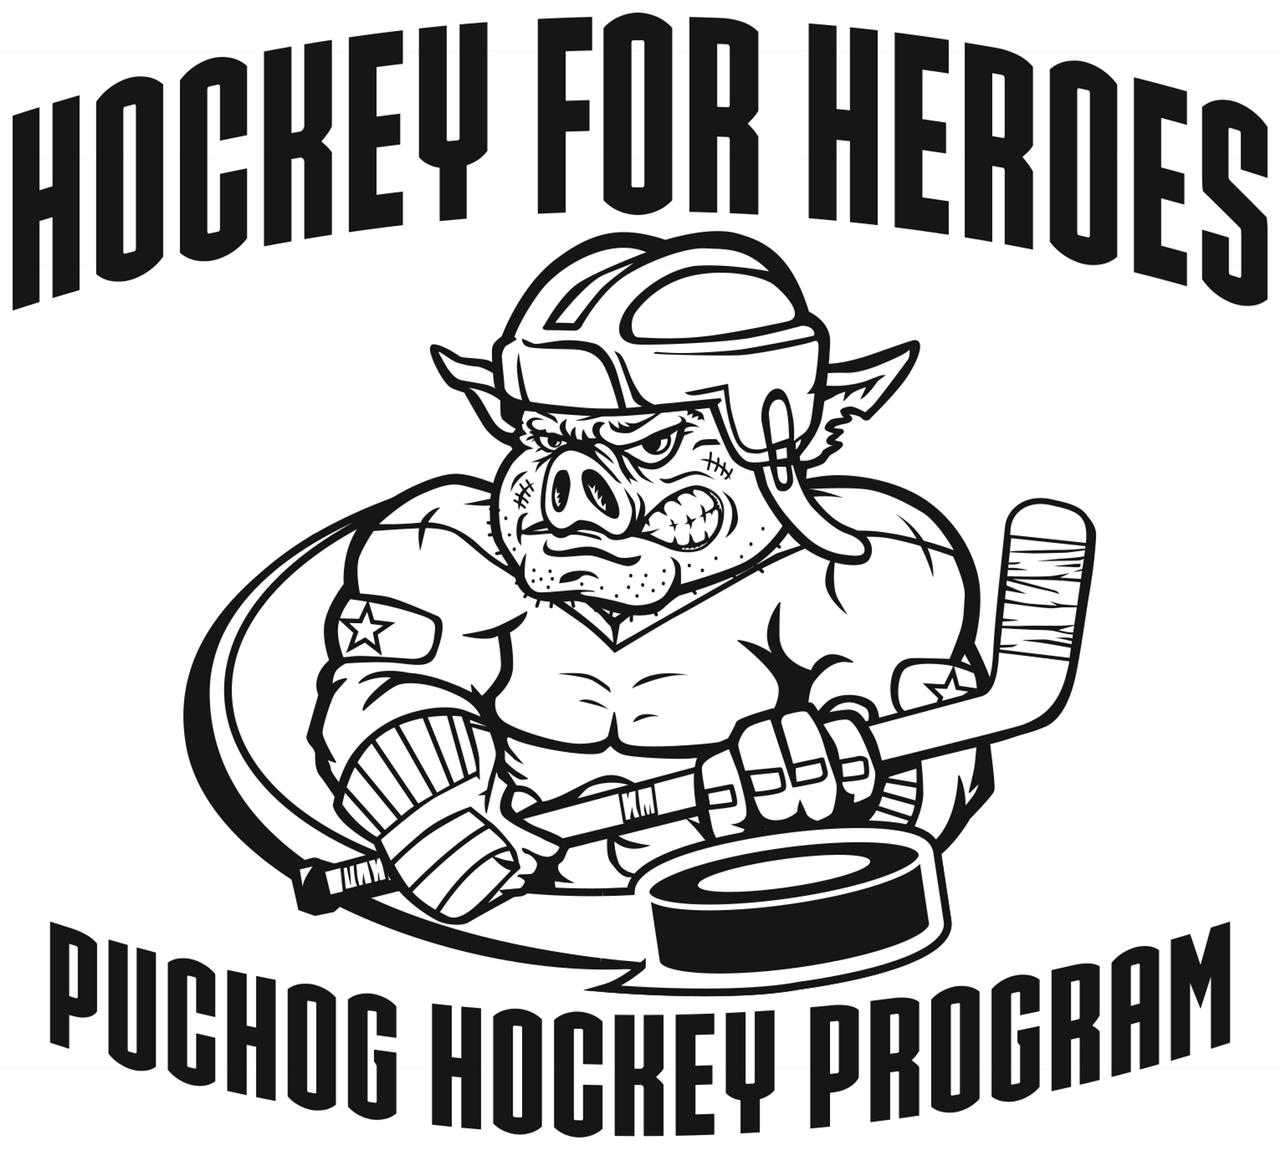 Hockey for Heroes